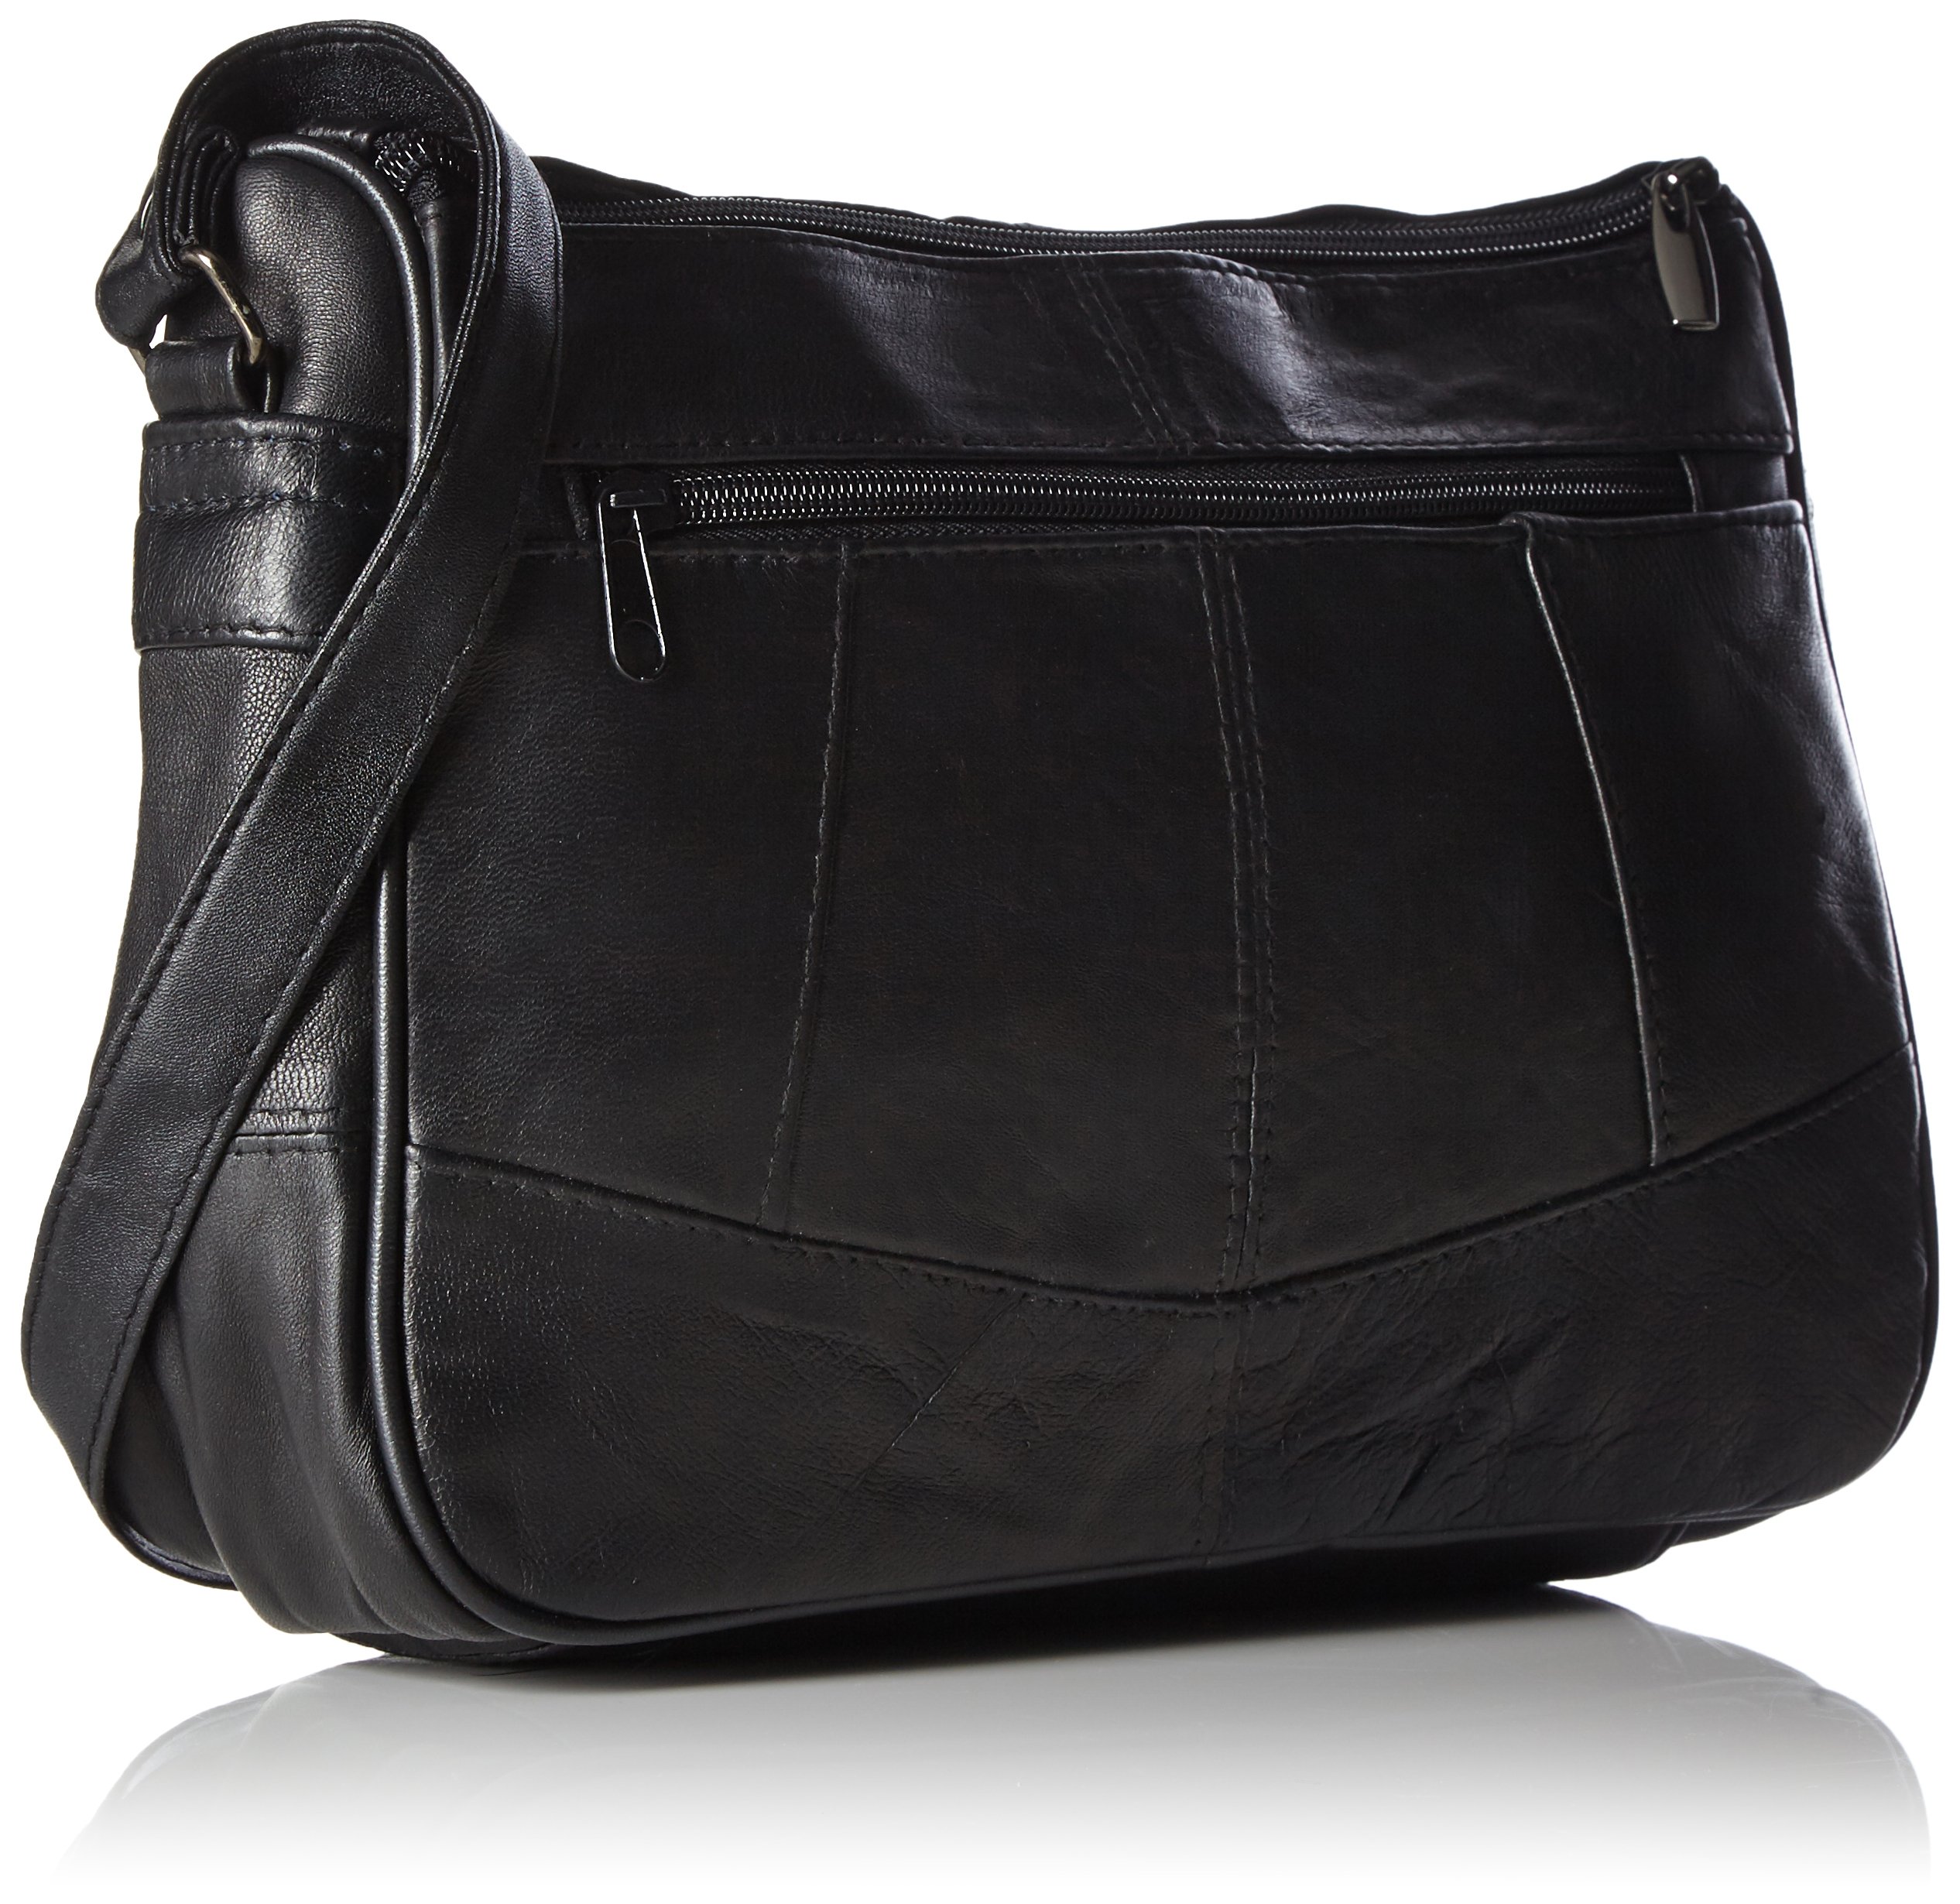 Lorenz Leather Handbag # 1968 - Black